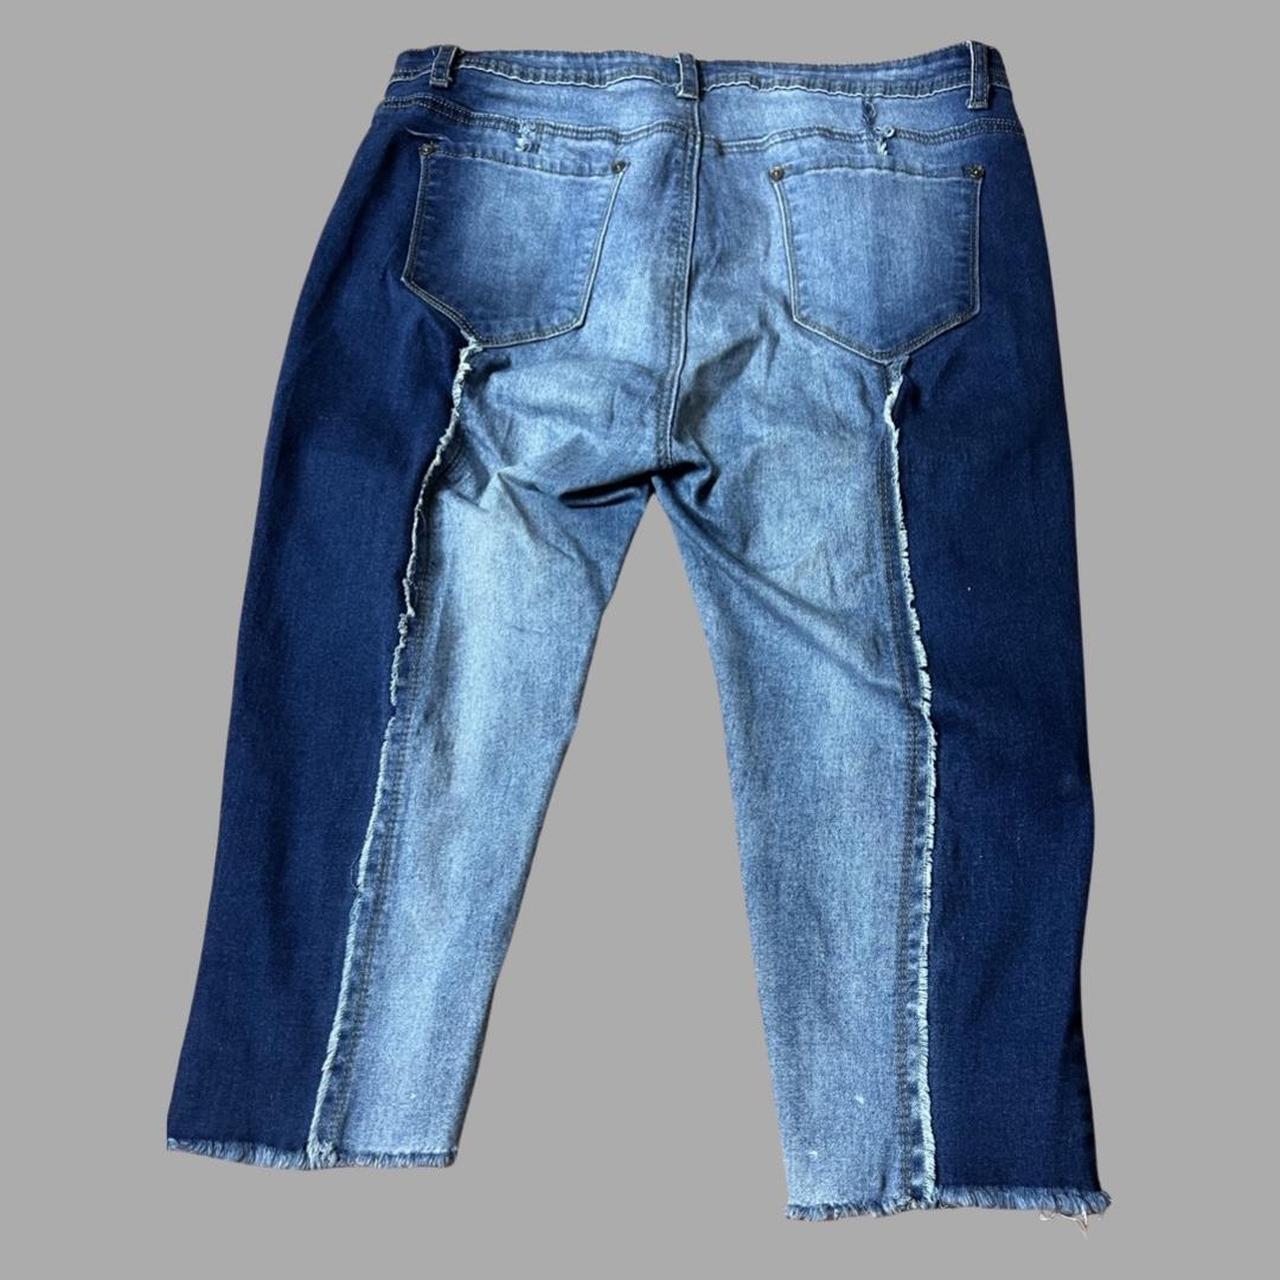 AQ Denim Jeans Women's Junior Size 15/16 Blue... - Depop